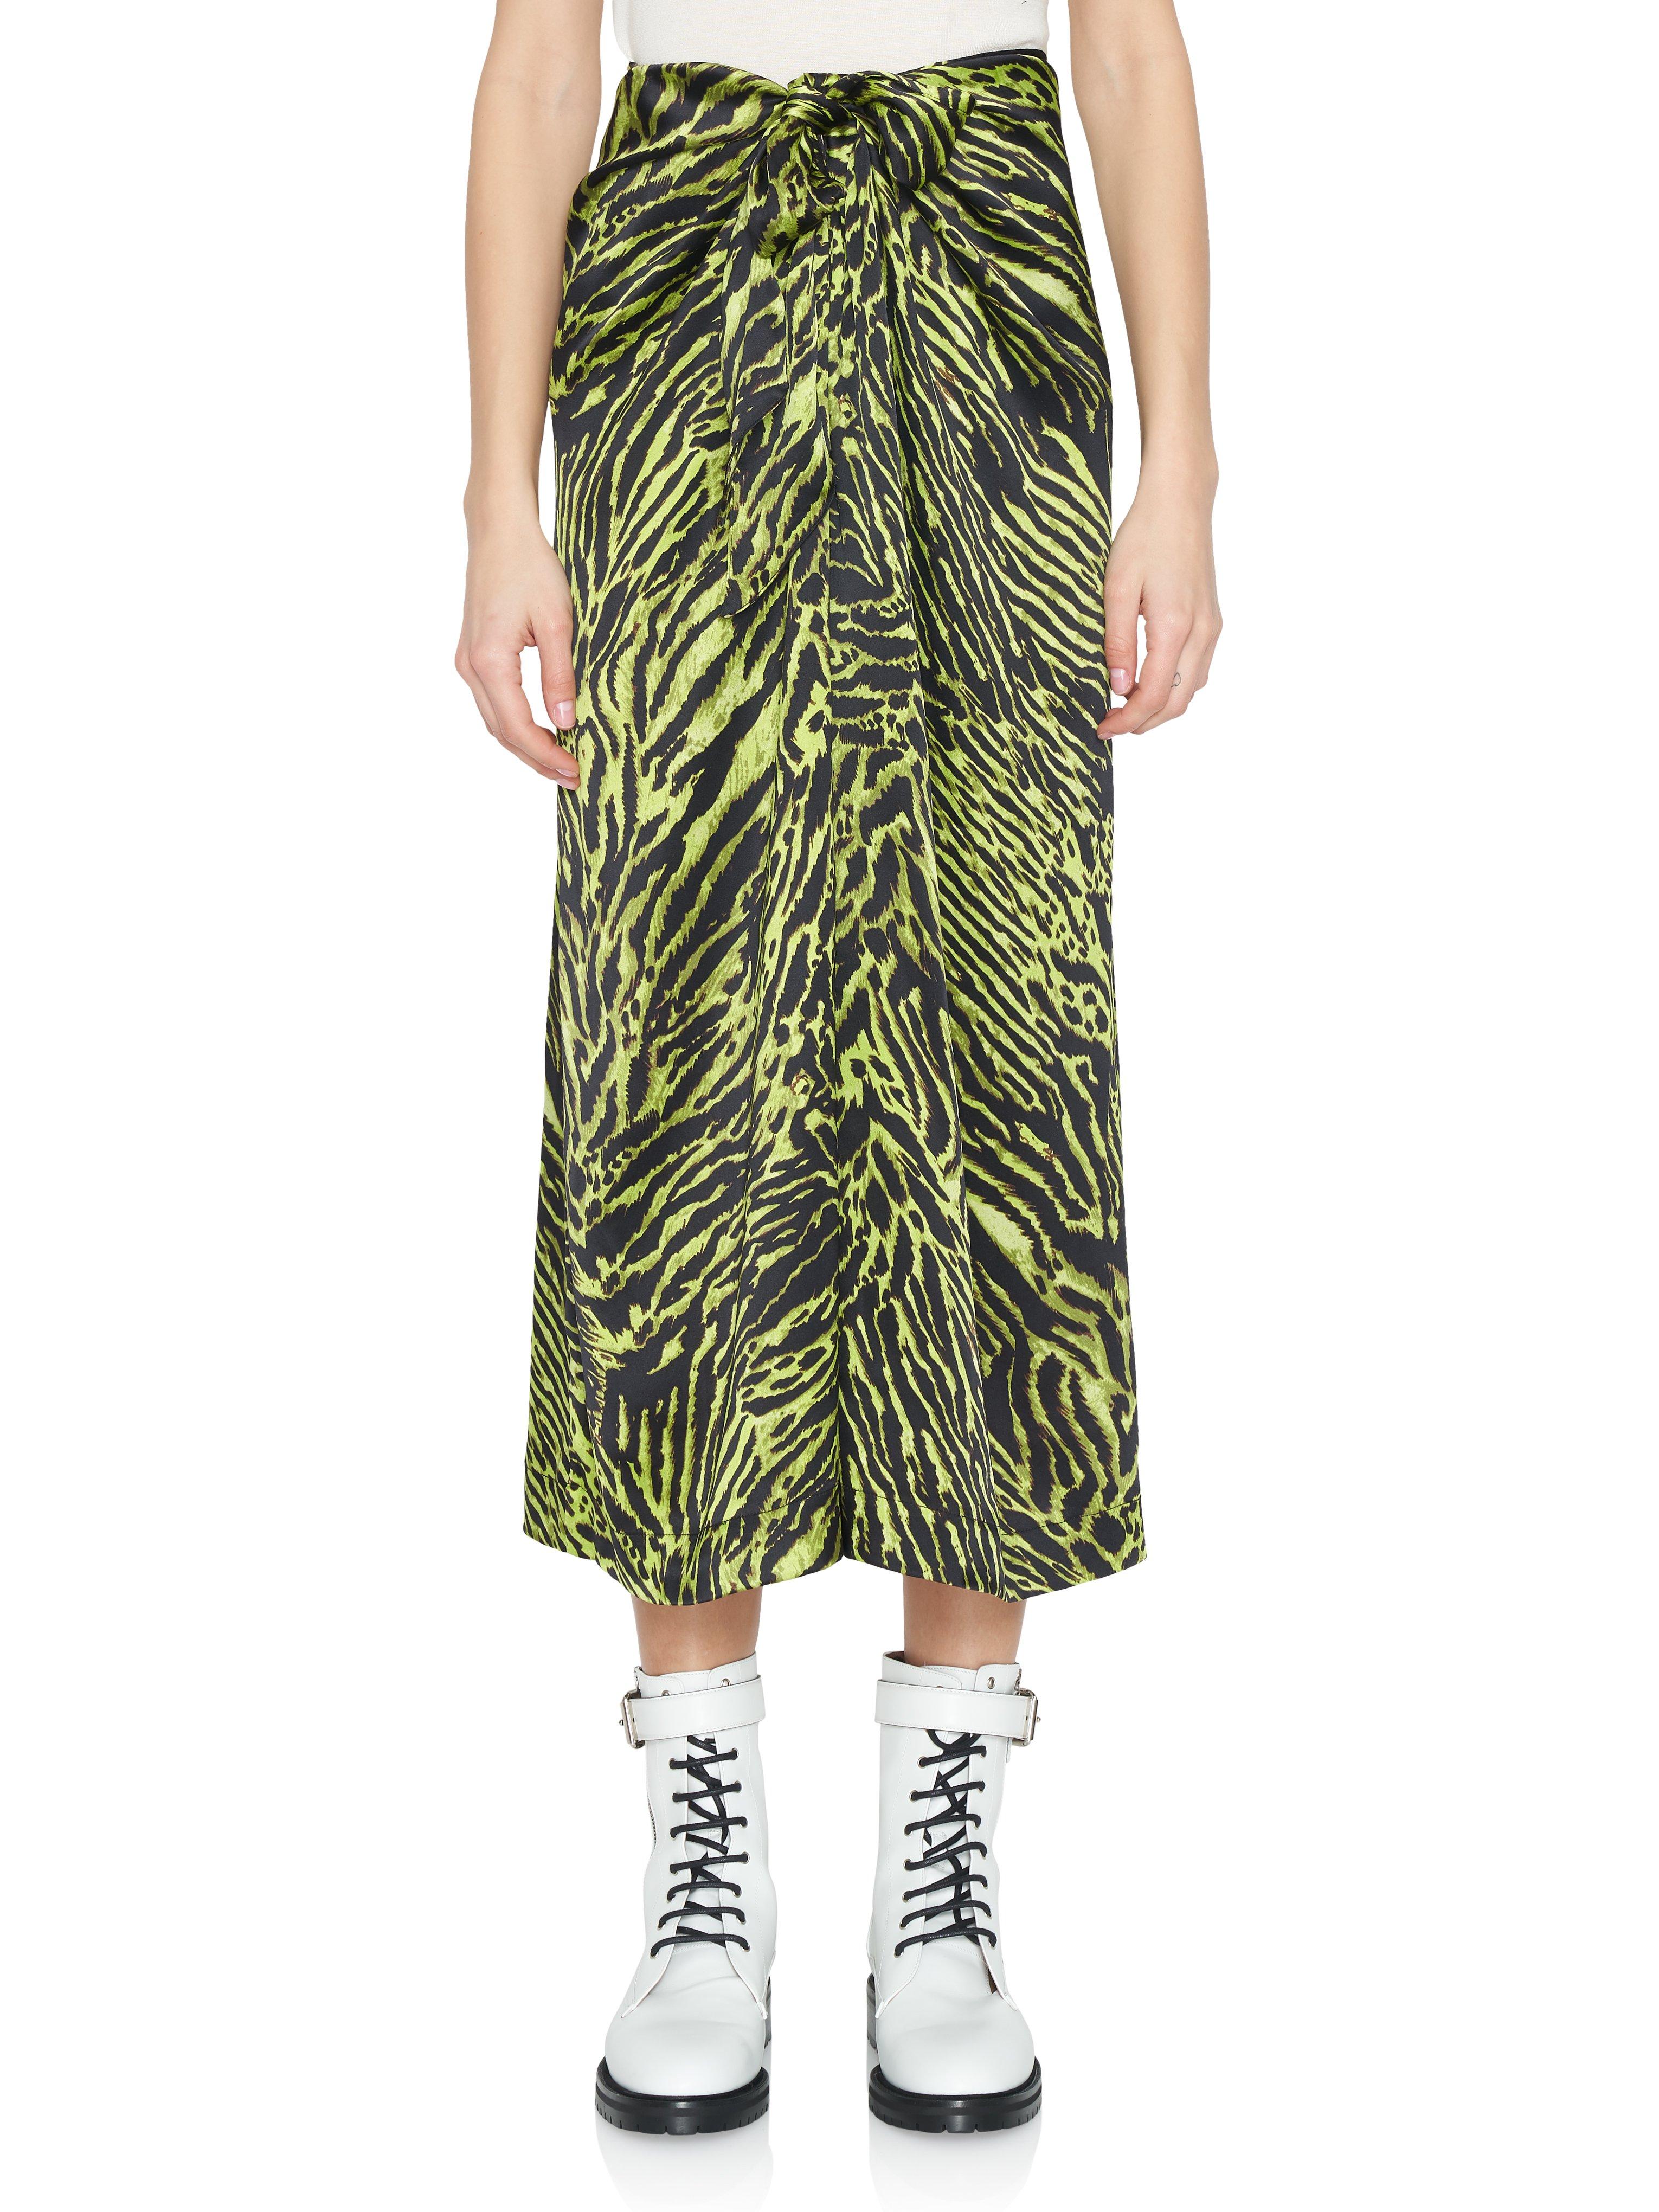 Ganni Tiger-print Stretch-silk Skirt in Green - Lyst